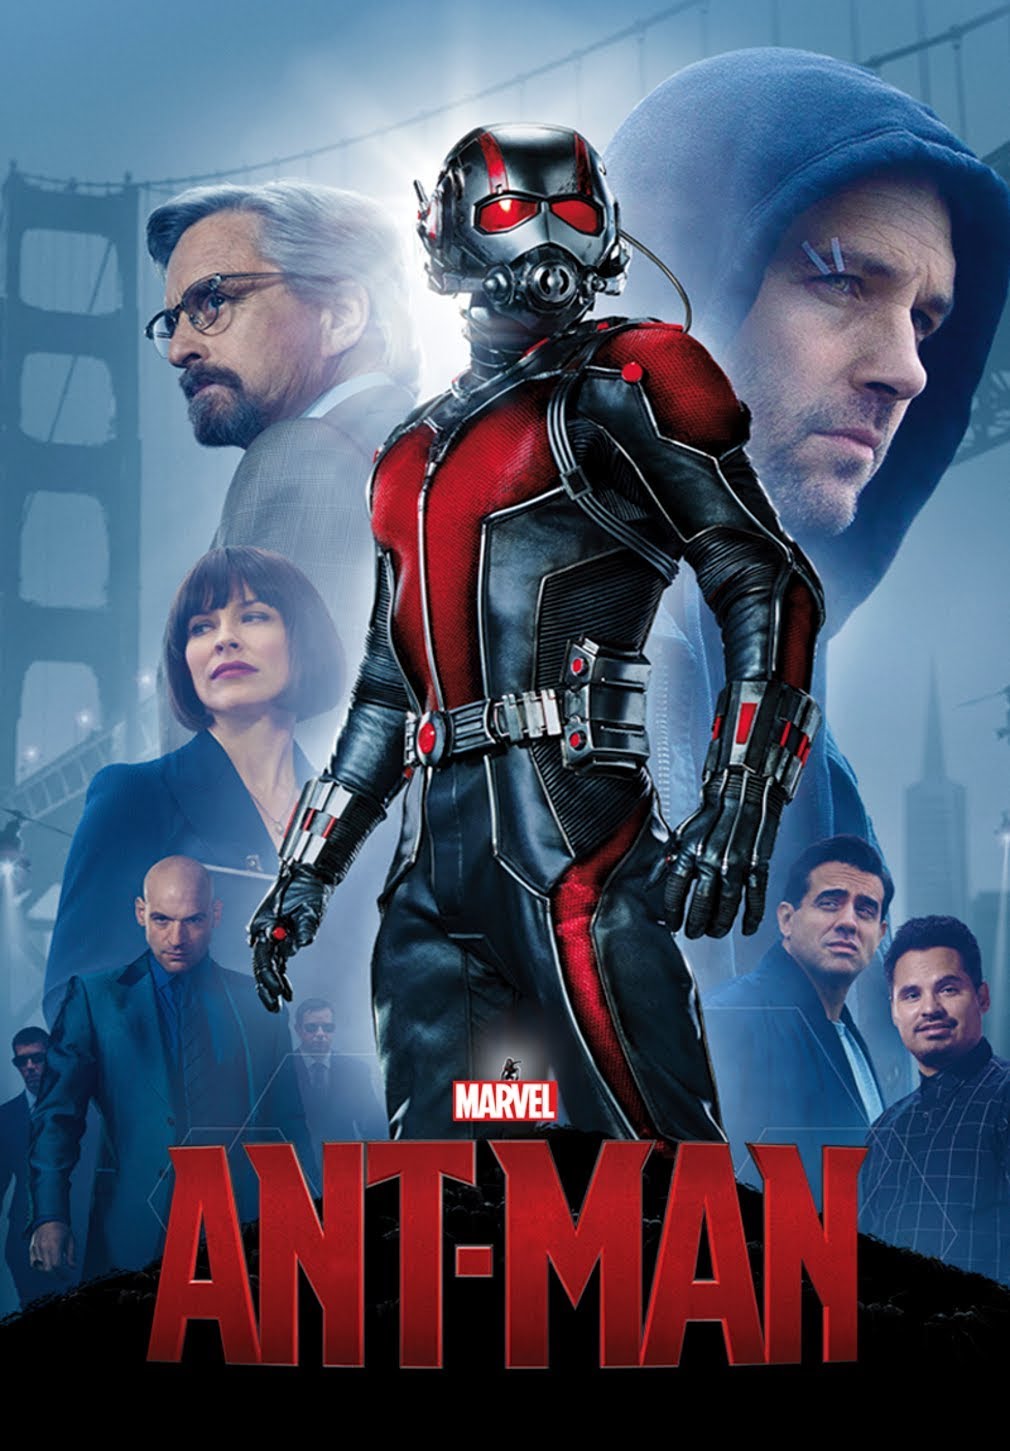 Ant-Man [HD/3D] (2015)